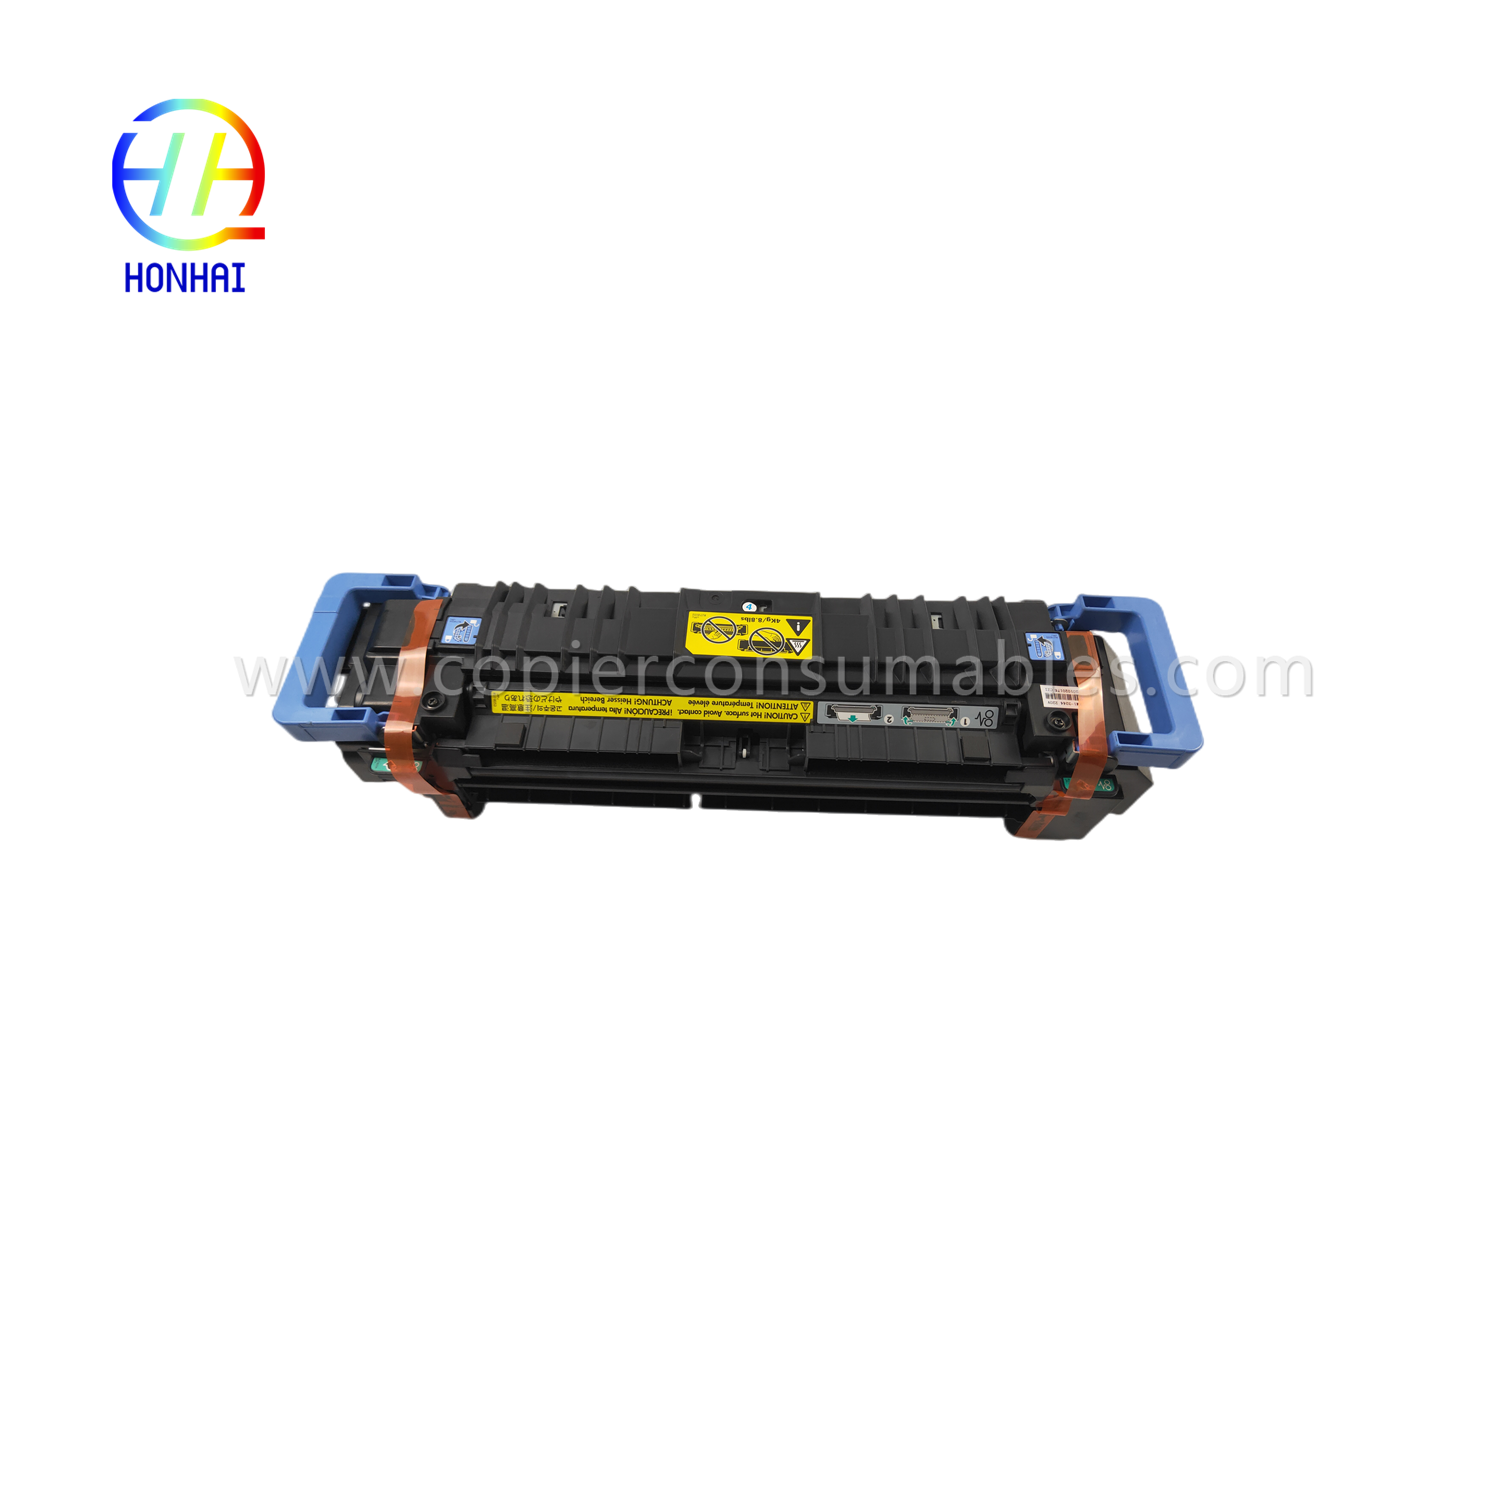 https://c585.goodao.net/fuser-assembly-unit-for-hp-m855-m880-m855dn-m855xh-m880z-m880z-c1n54-67901-c1n58-67901-product/fusing-assheating-fix